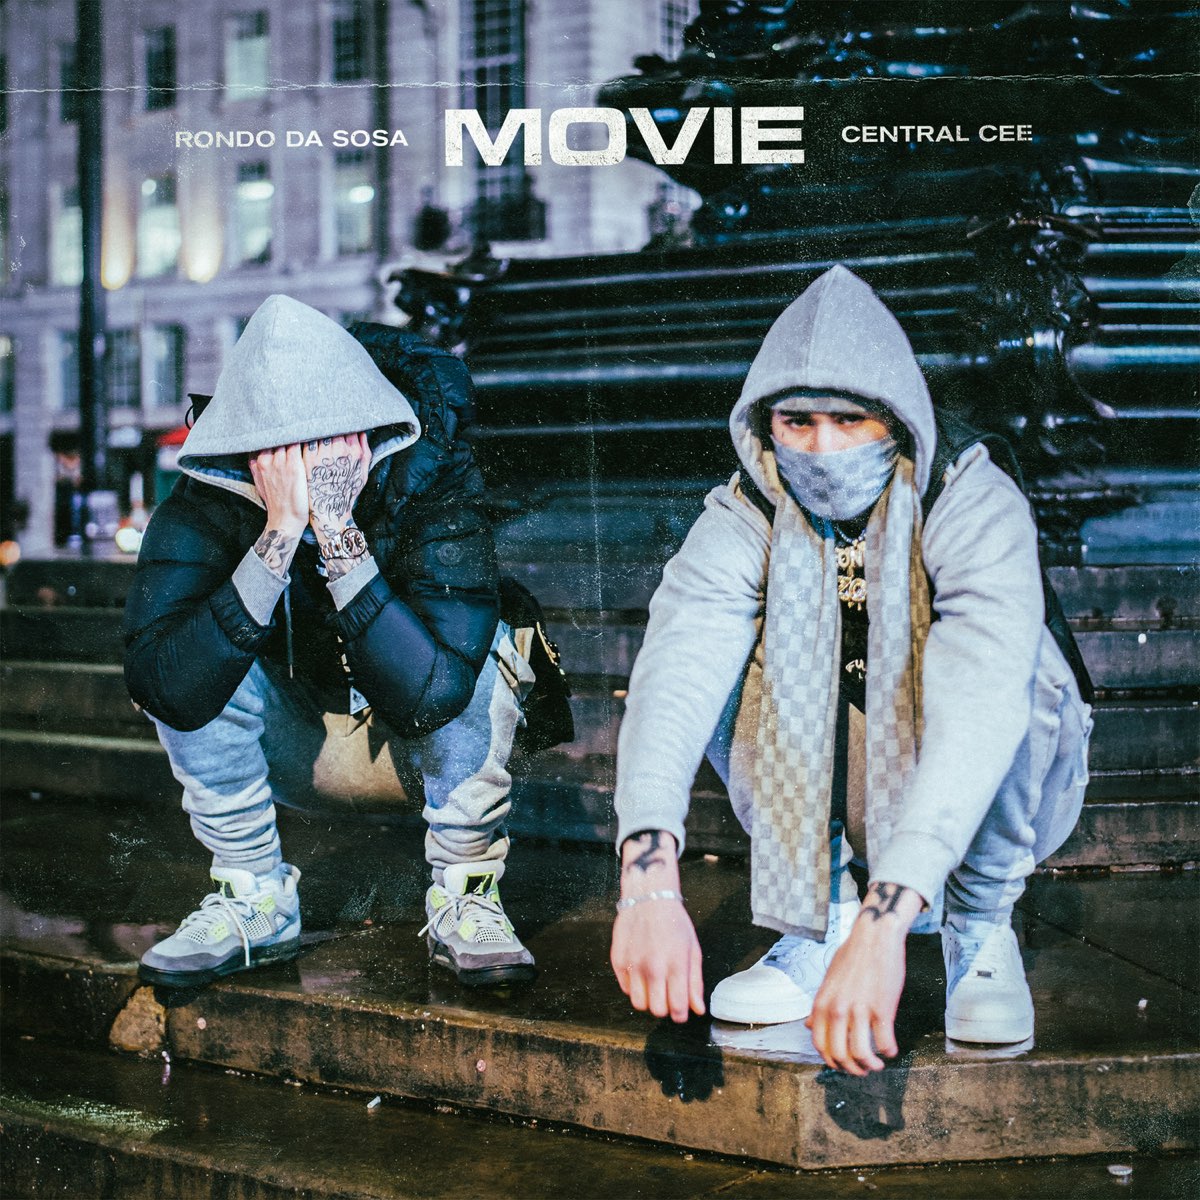 MOVIE (feat. Central Cee) - Single - Album by Rondodasosa & Nko - Apple  Music